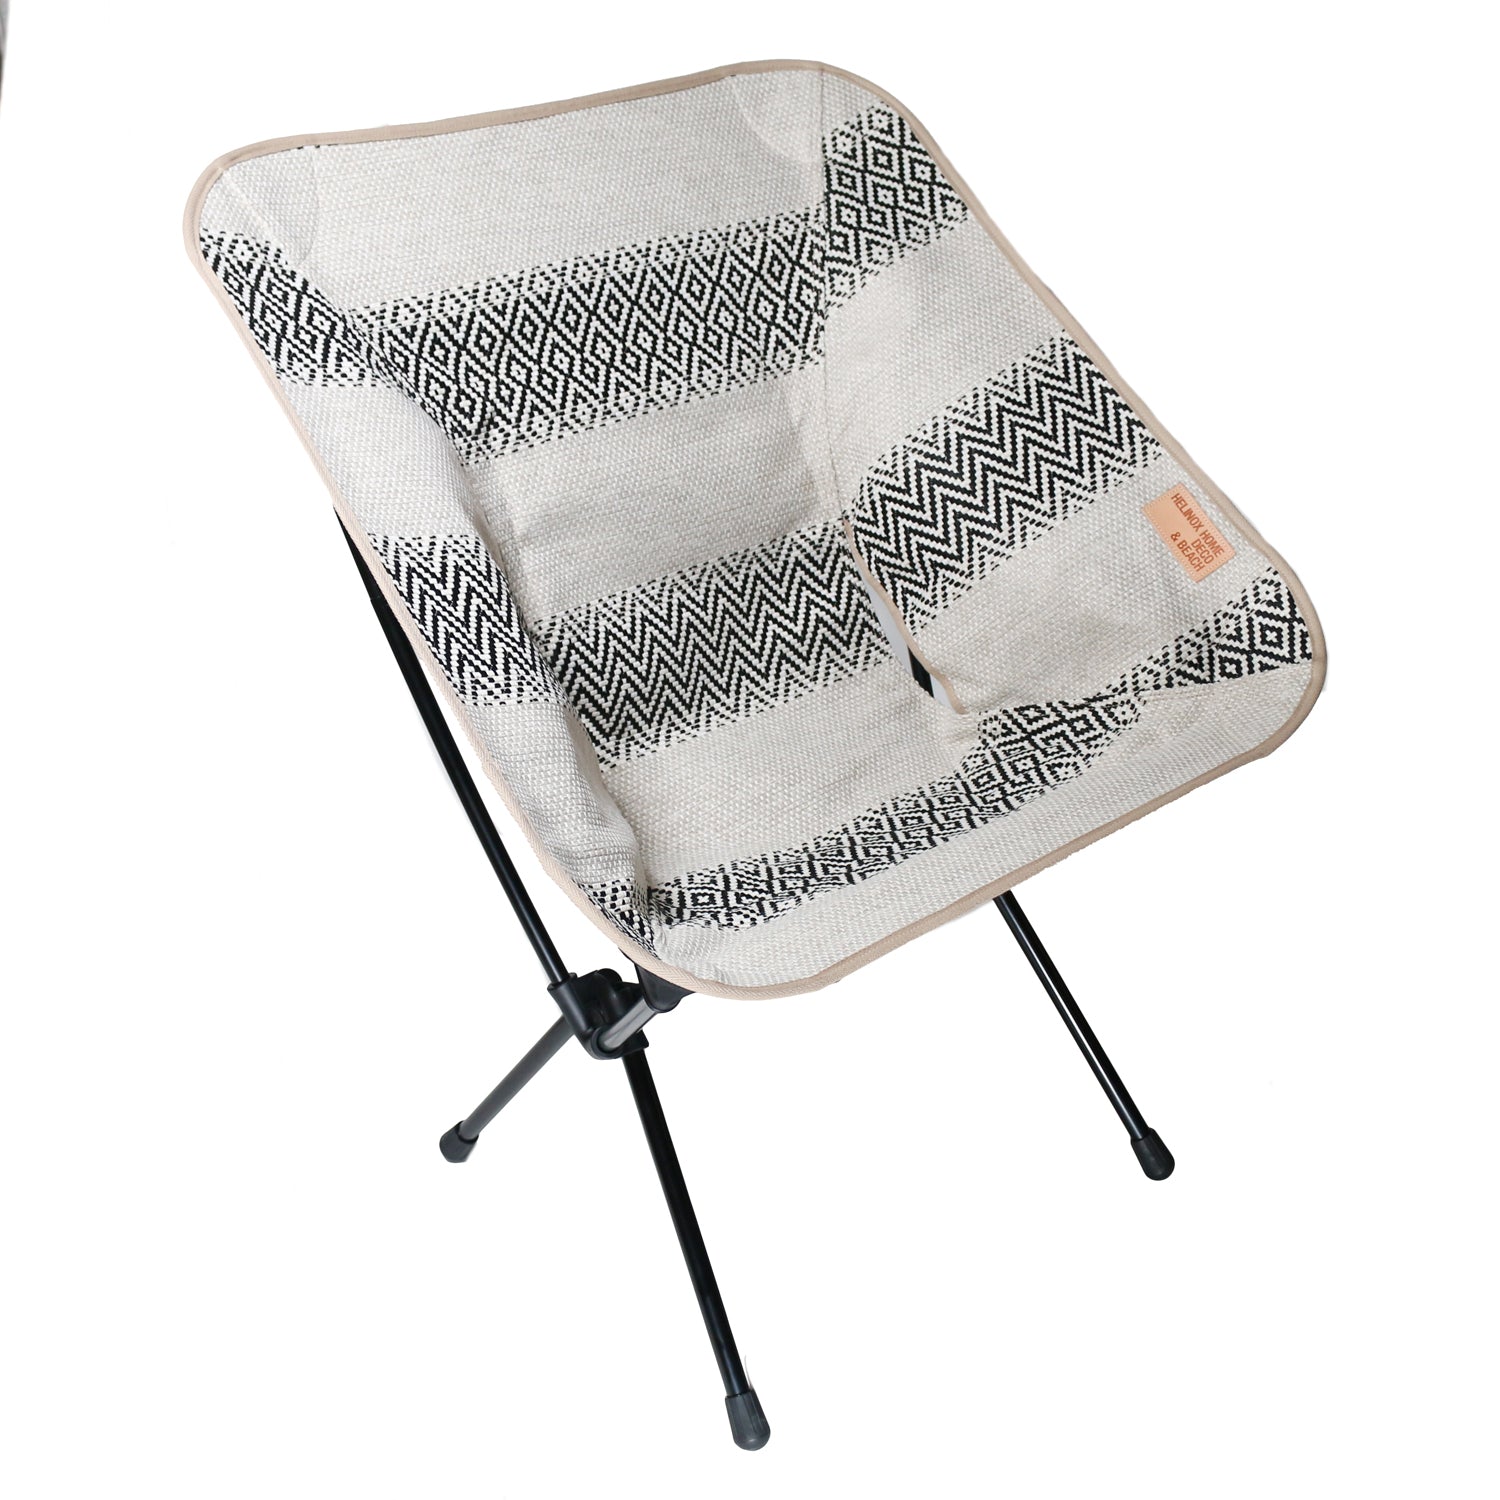 CUB0113 Helinox comfort chair XL